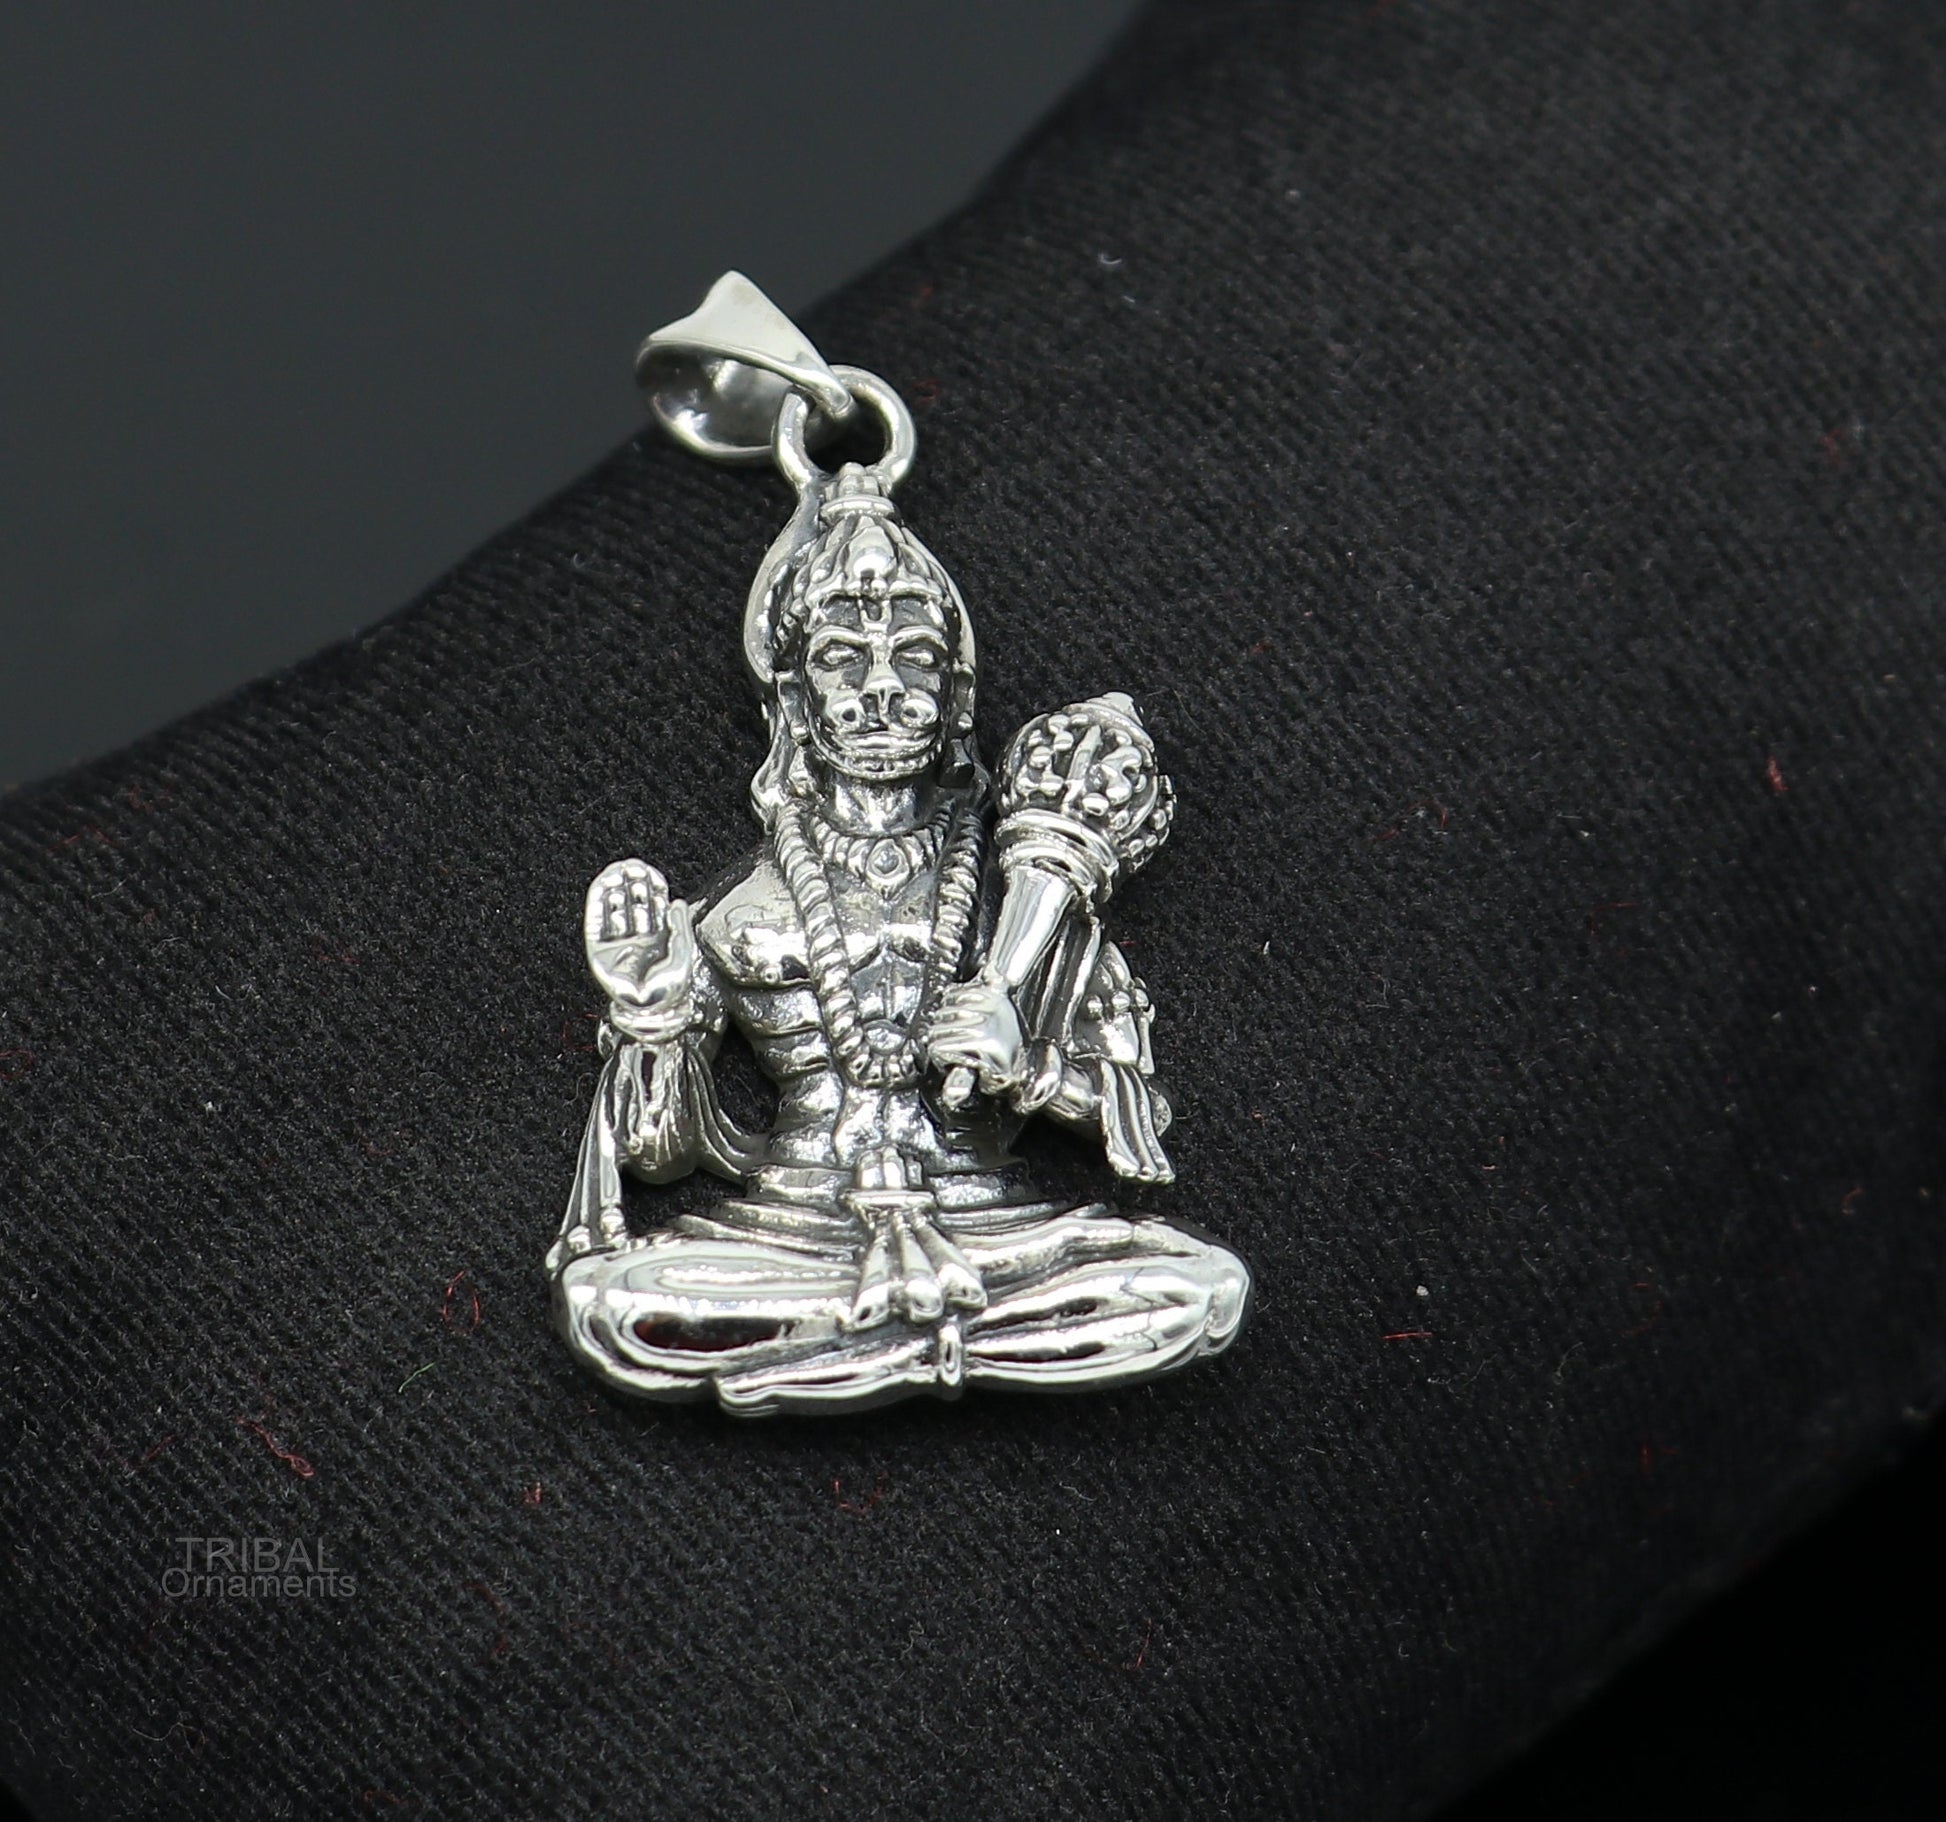 Pure 925 sterling silver handmade Hindu god Lord blessing Hanuman pendant, amazing designer Divine pendant unisex gifting jewelry nsp440 - TRIBAL ORNAMENTS